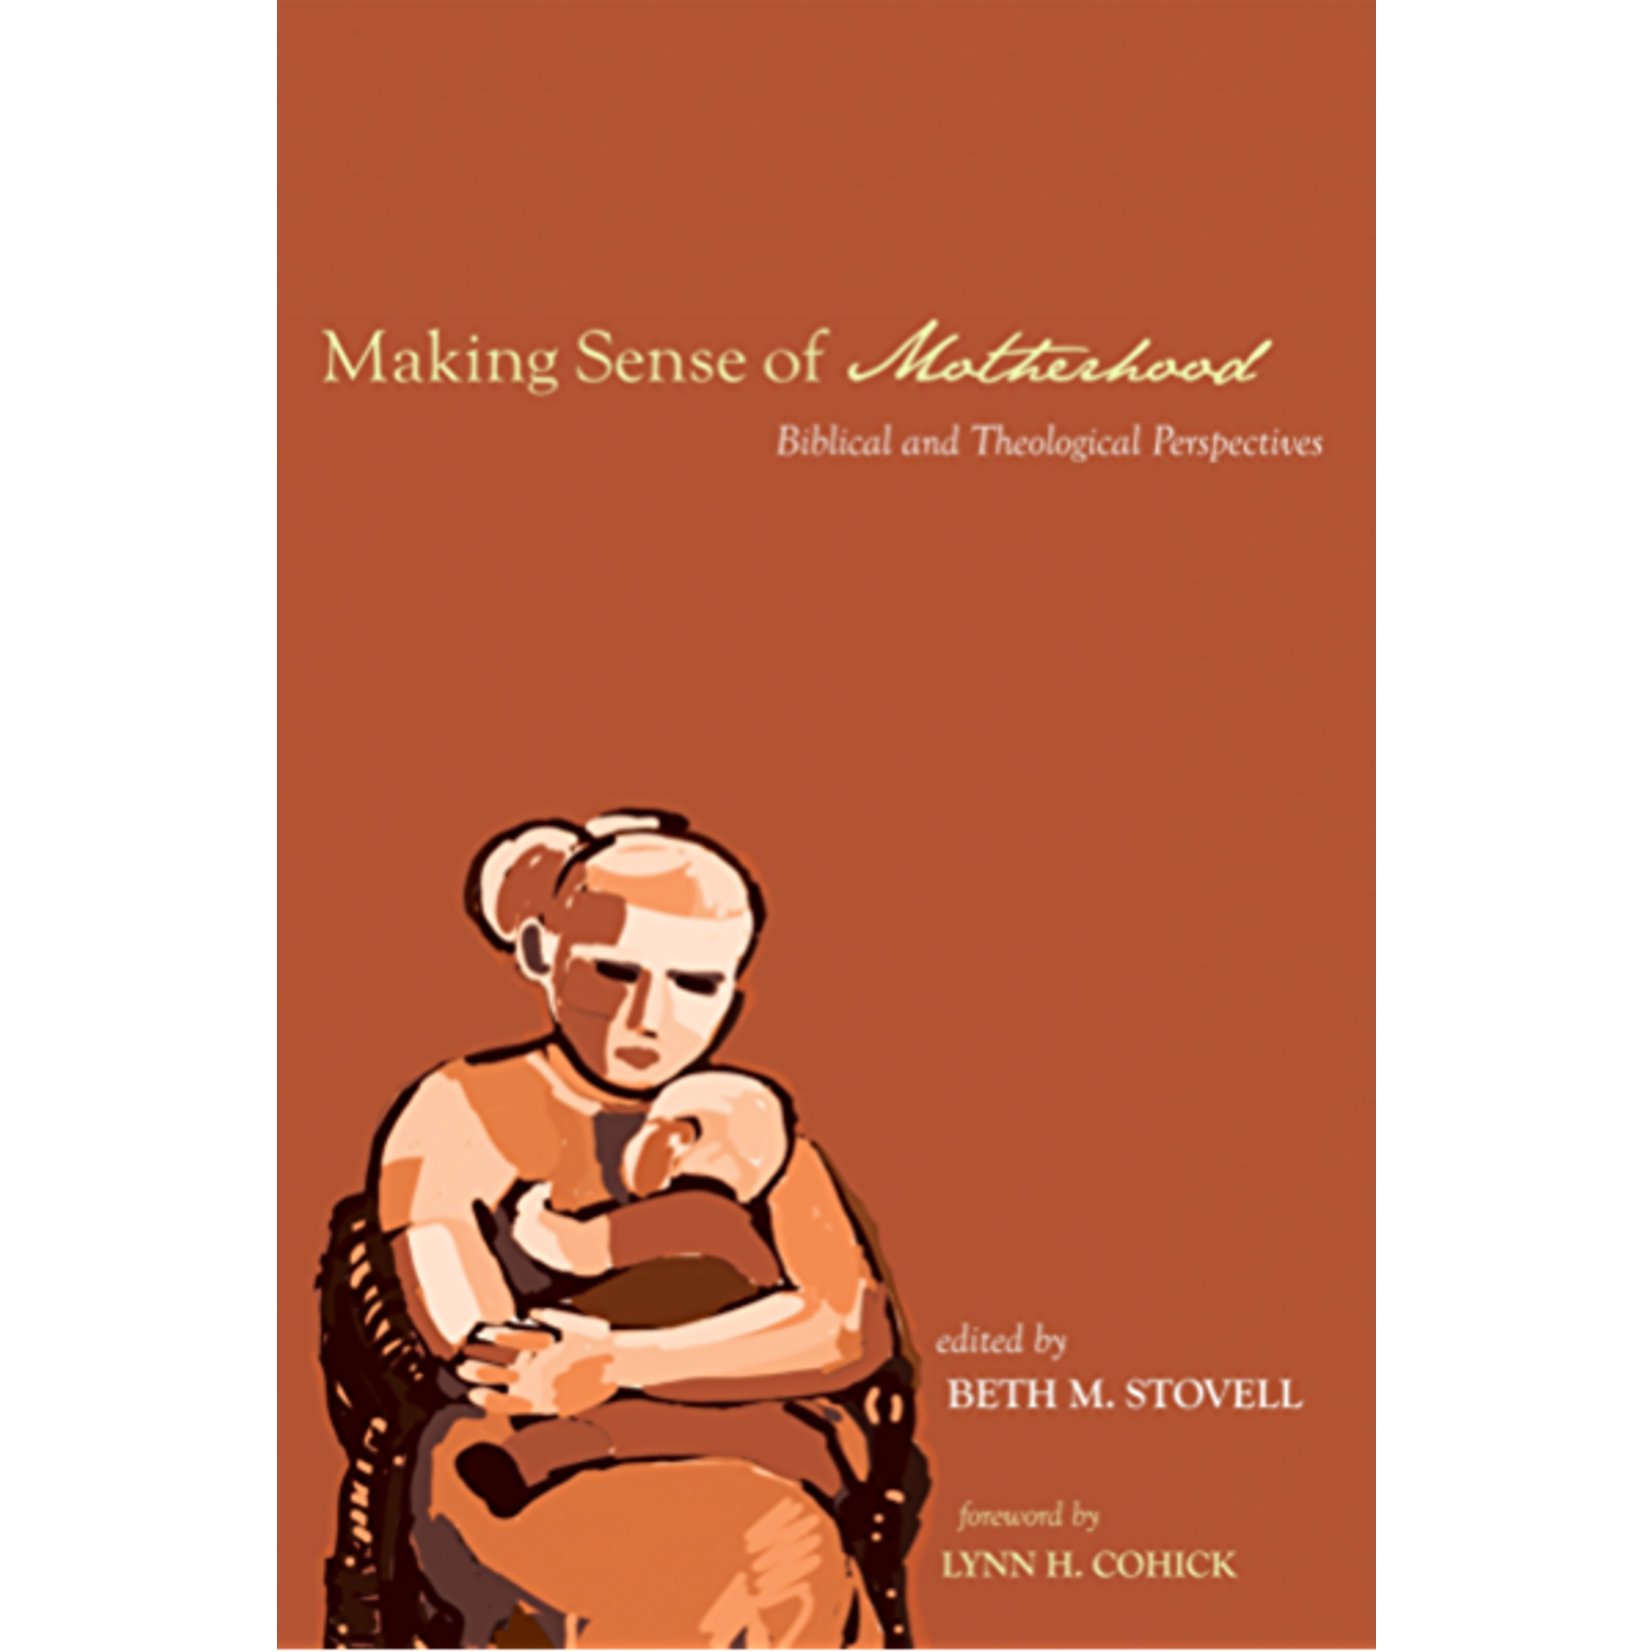 Making Sense of Motherhood - Beth M. Stovell